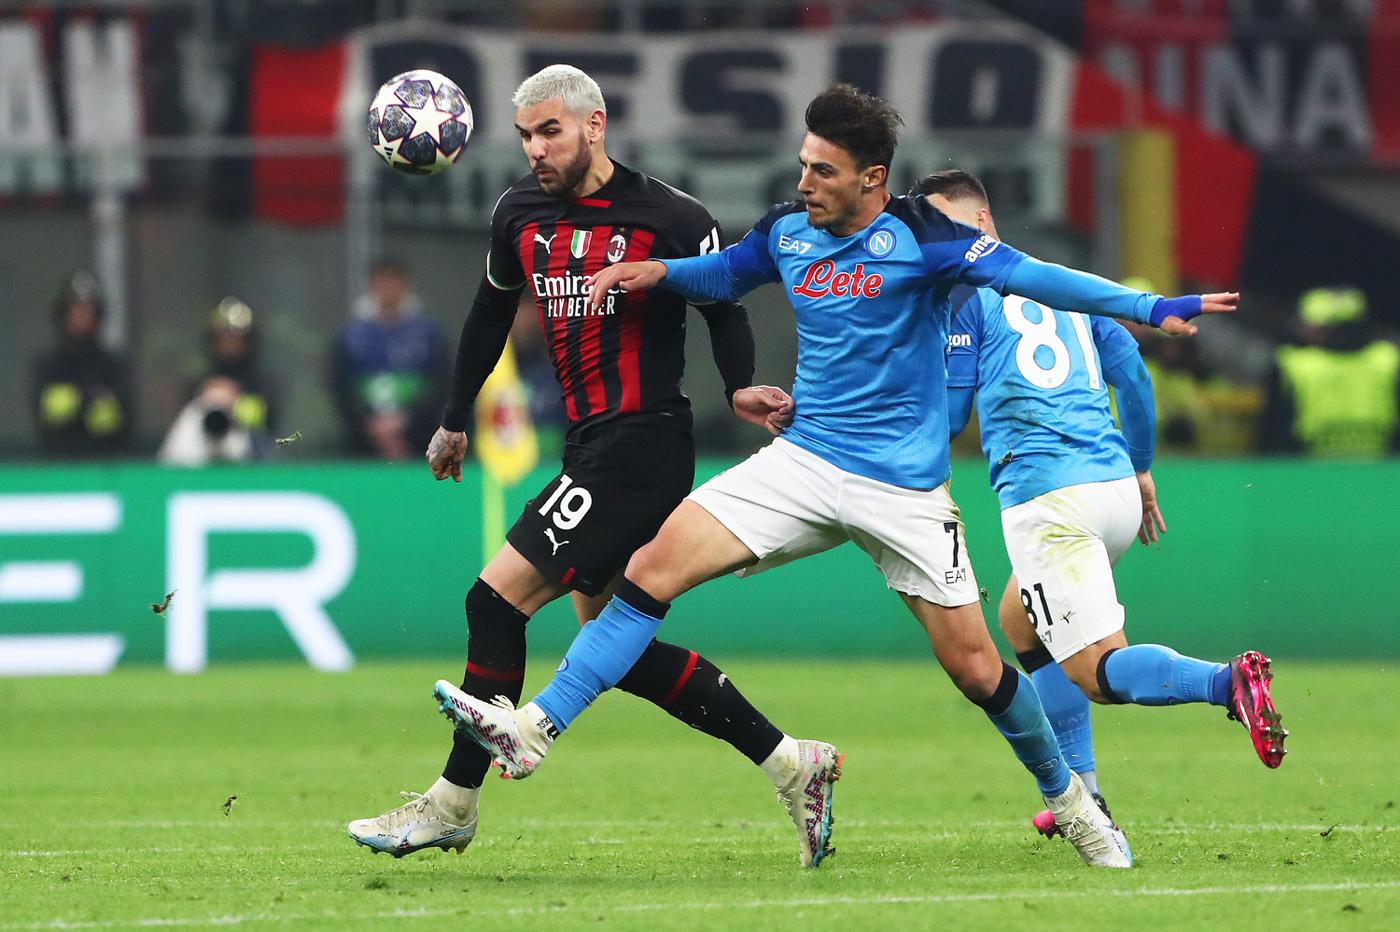 Mailand - Neapel - 1:0. Champions League. Spielbericht, Statistiken